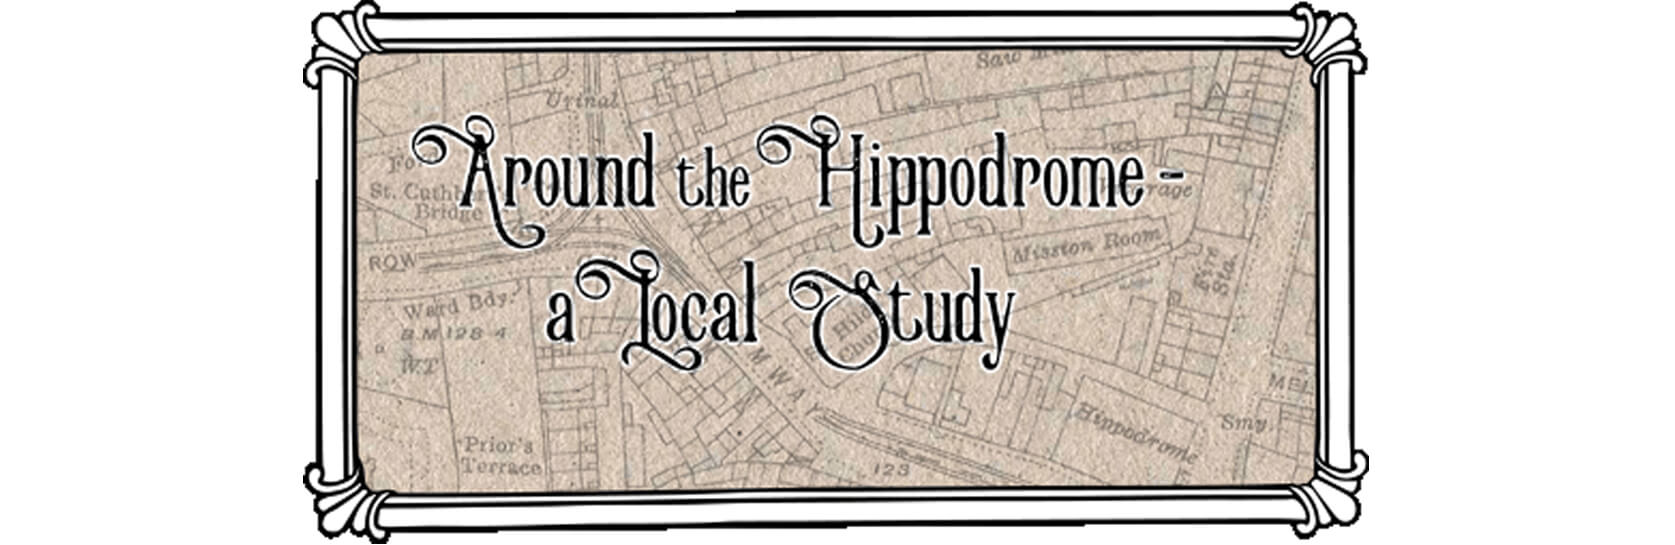 Darlington Hippodrome PowerPoint Slides - Topic 4 - Around the Hippodrome - A Local Study